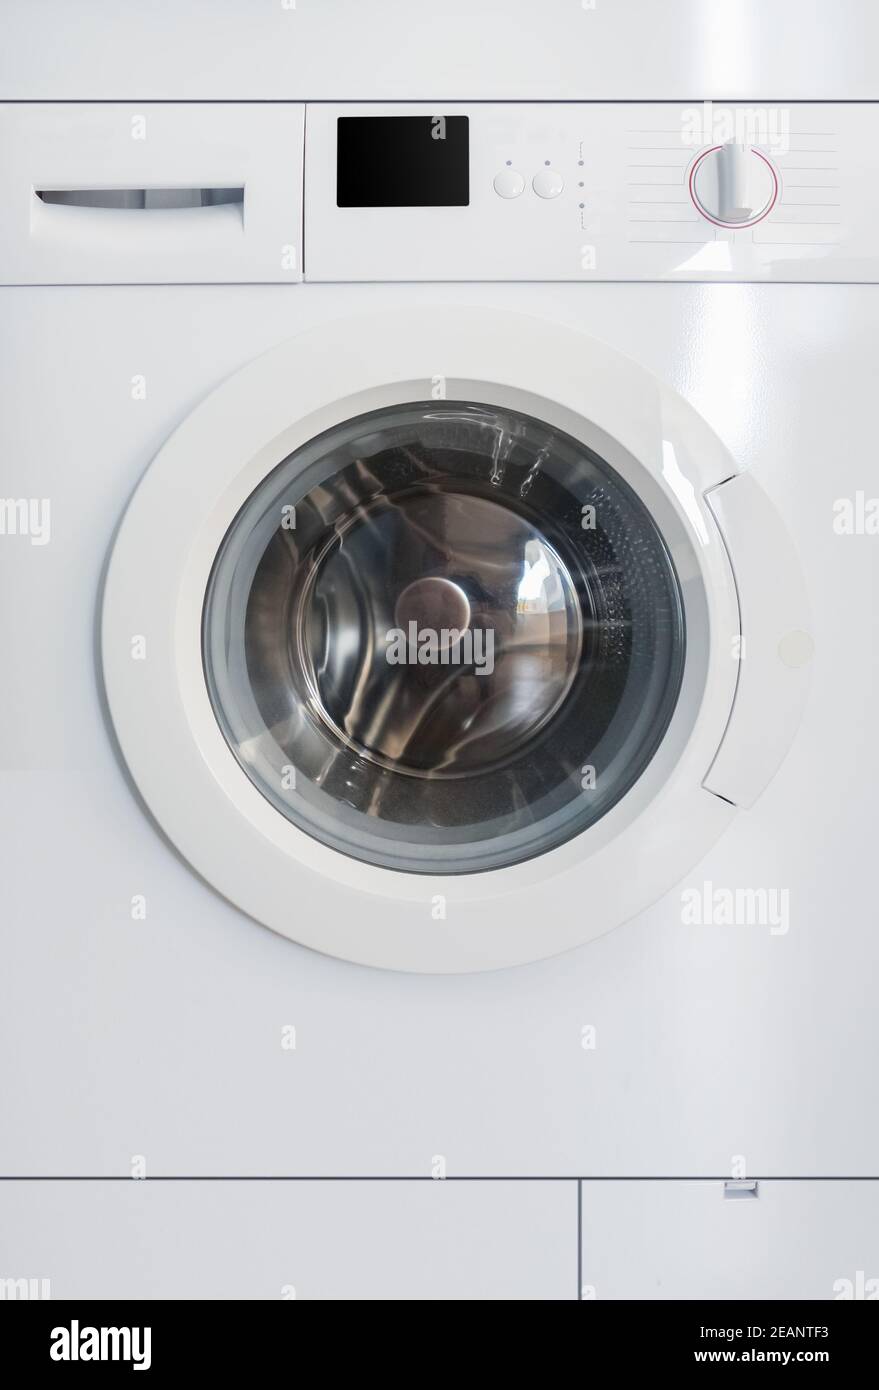 Washing machine front view Stock Photo